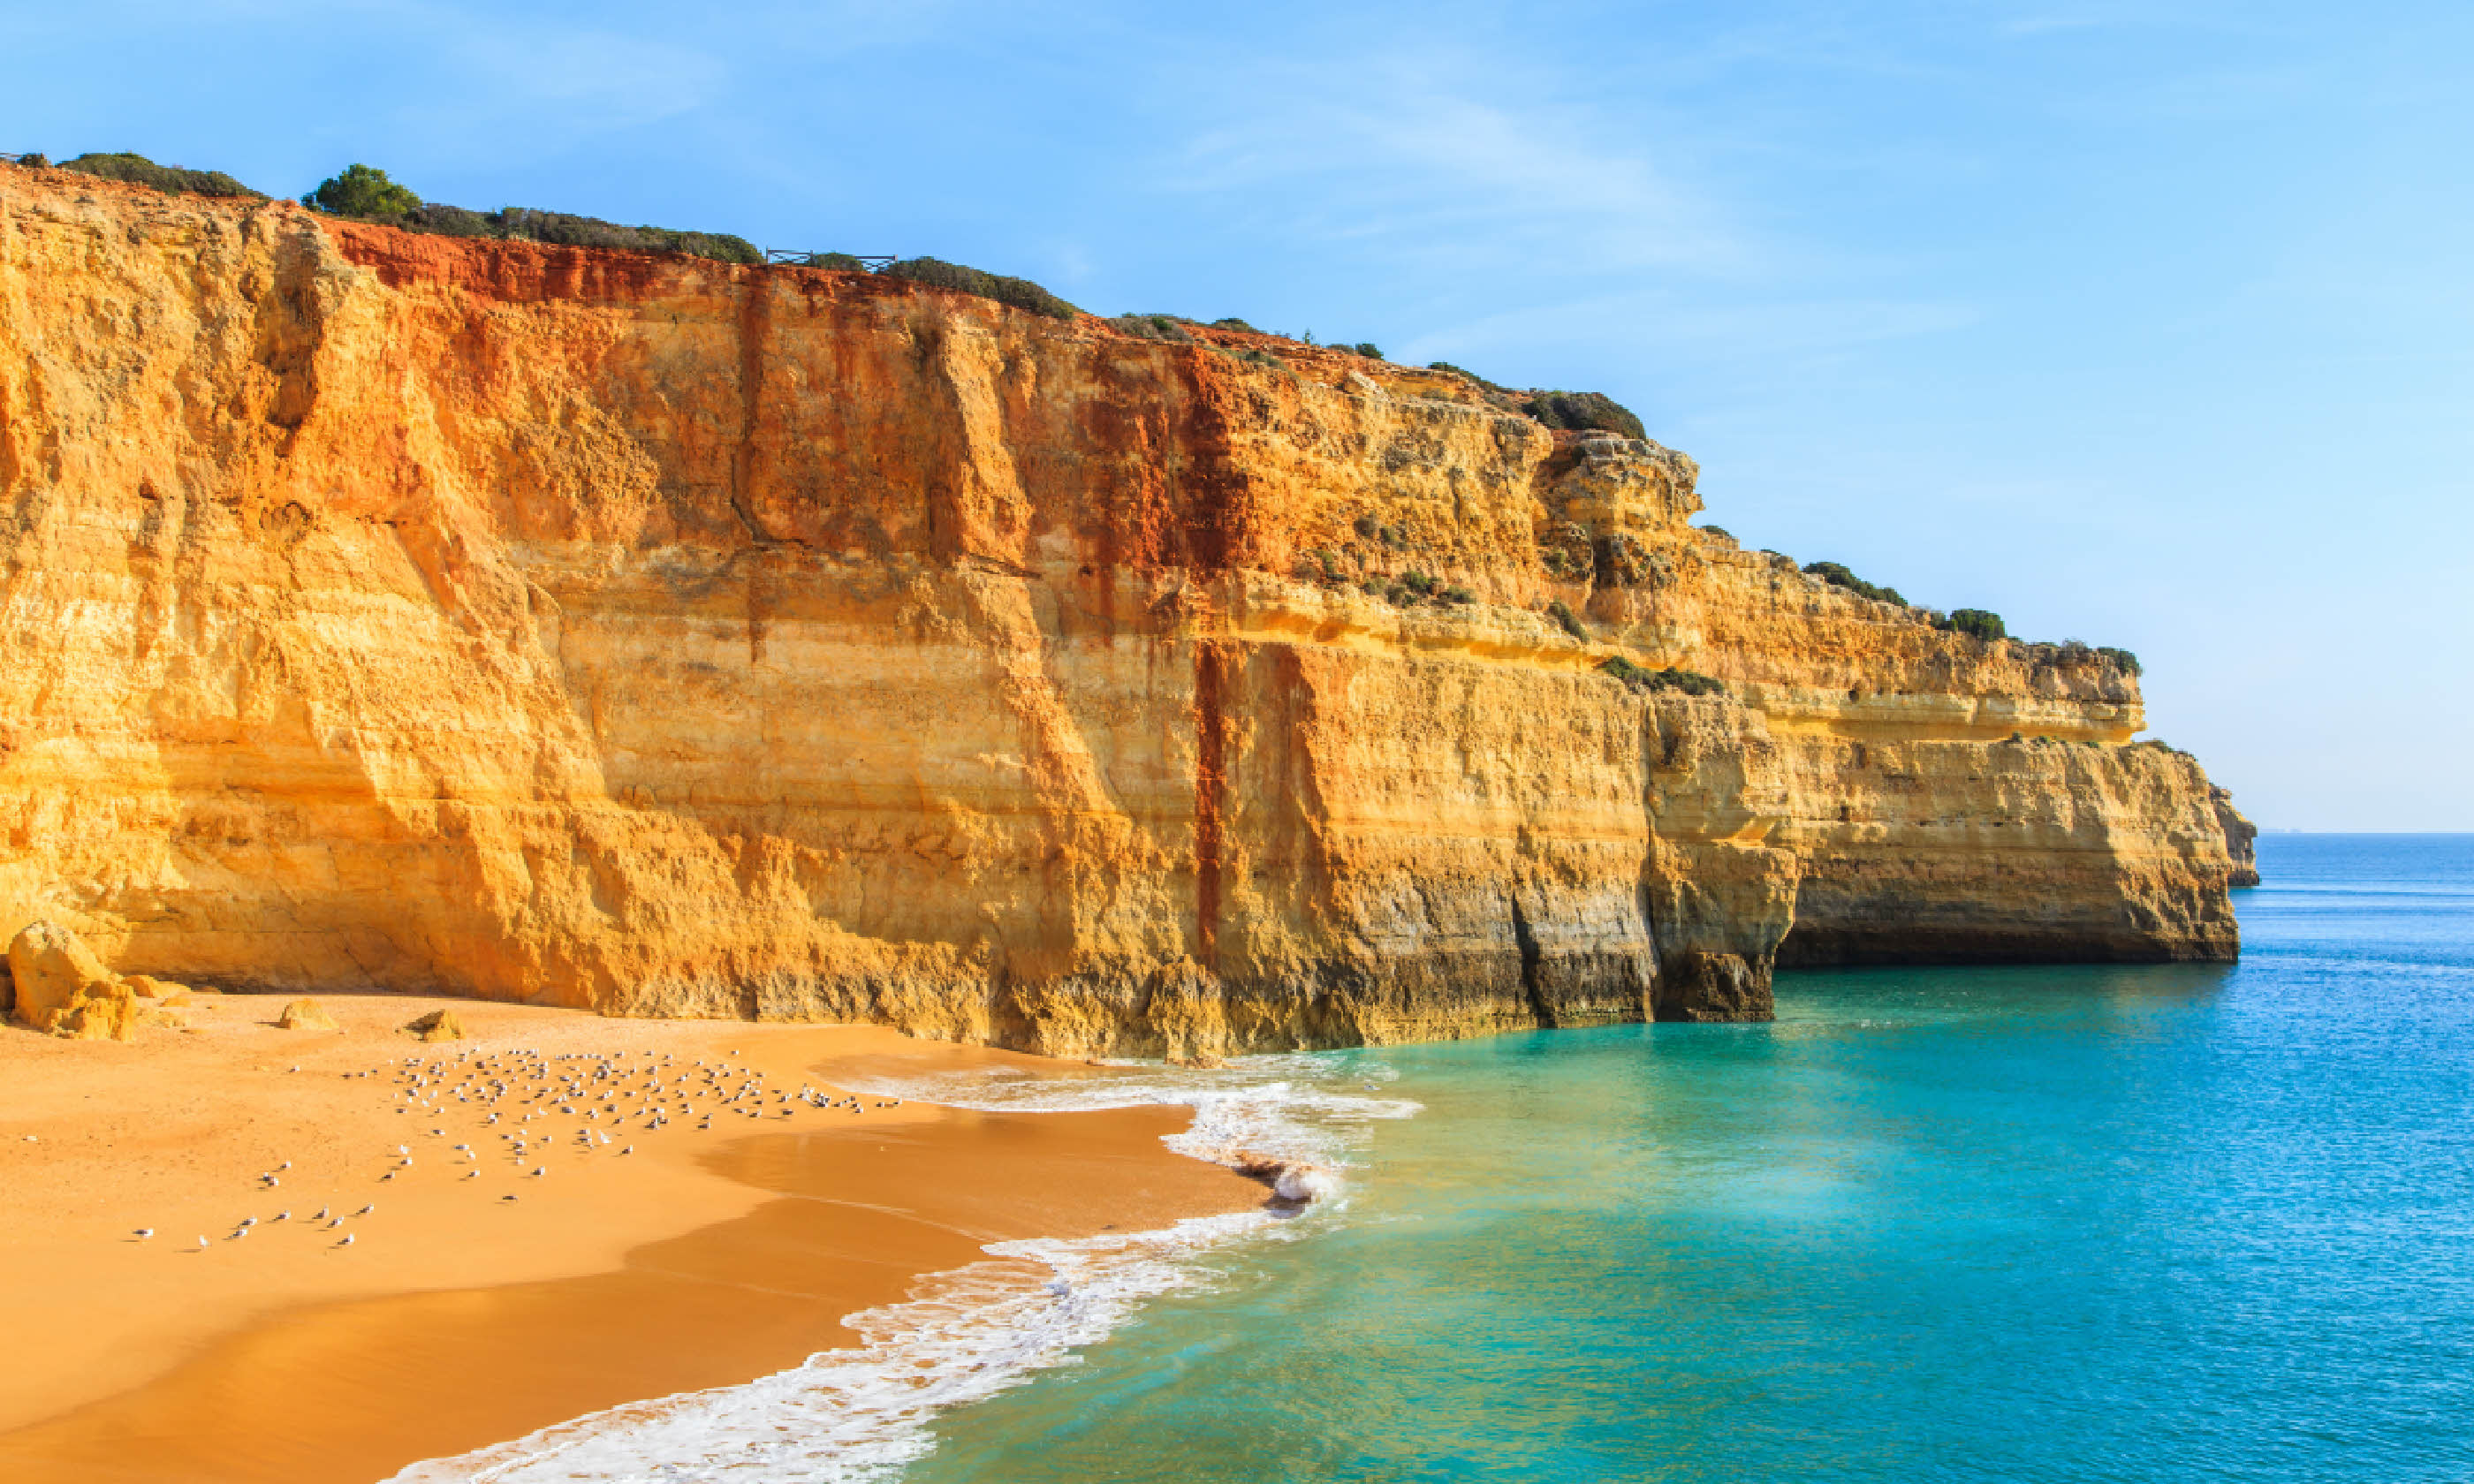 Praia de Benagil in Algarve region (Shutterstock: see credit below)